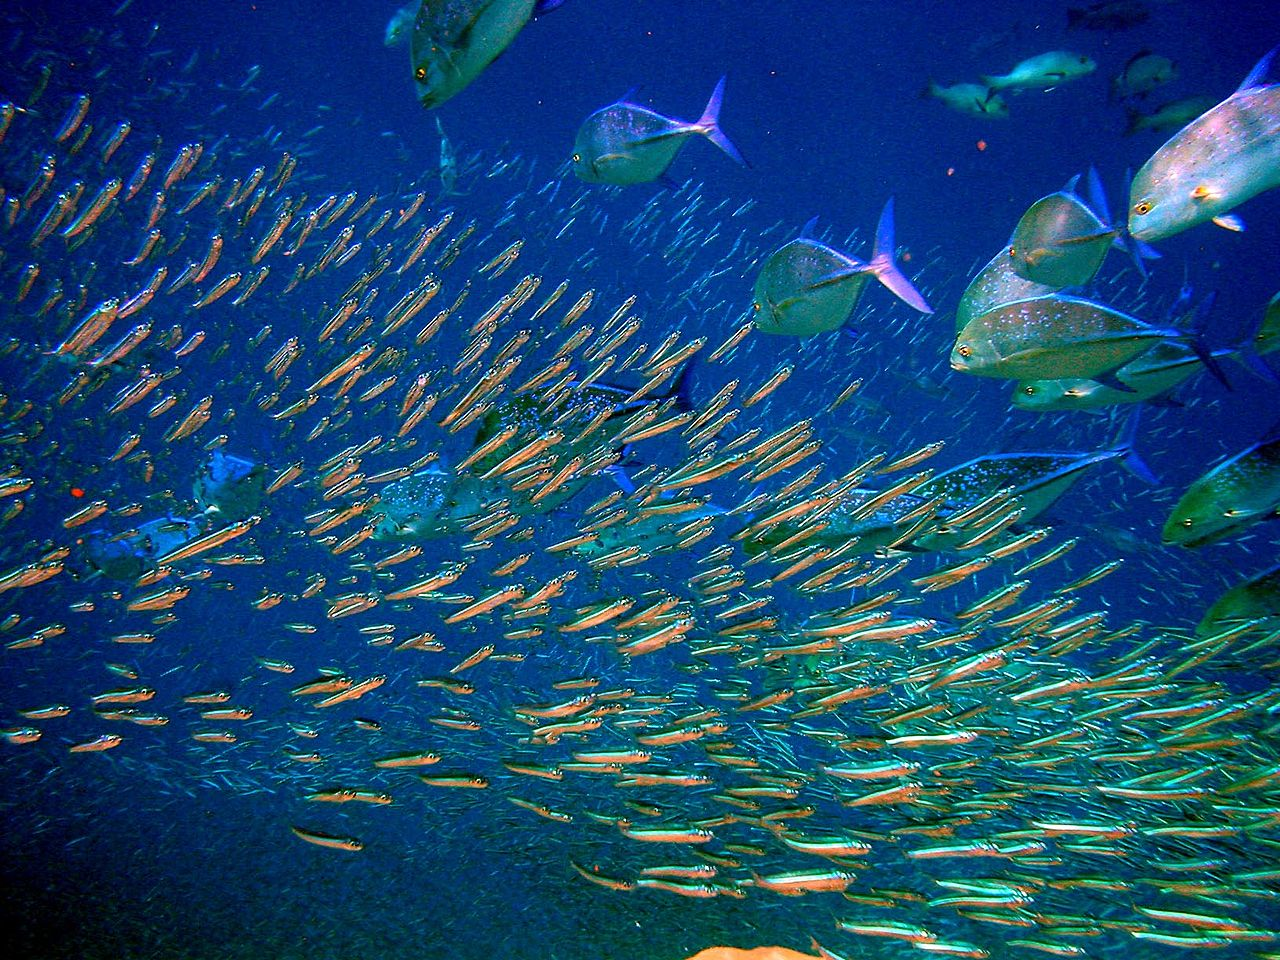 Moofushi Kandu fish by Bruno de Giusti - Own work. Licensed under CC BY-SA 2.5 it via Commons - https://commons.wikimedia.org/wiki/File:Moofushi_Kandu_fish.jpg#/media/File:Moofushi_Kandu_fish.jpg